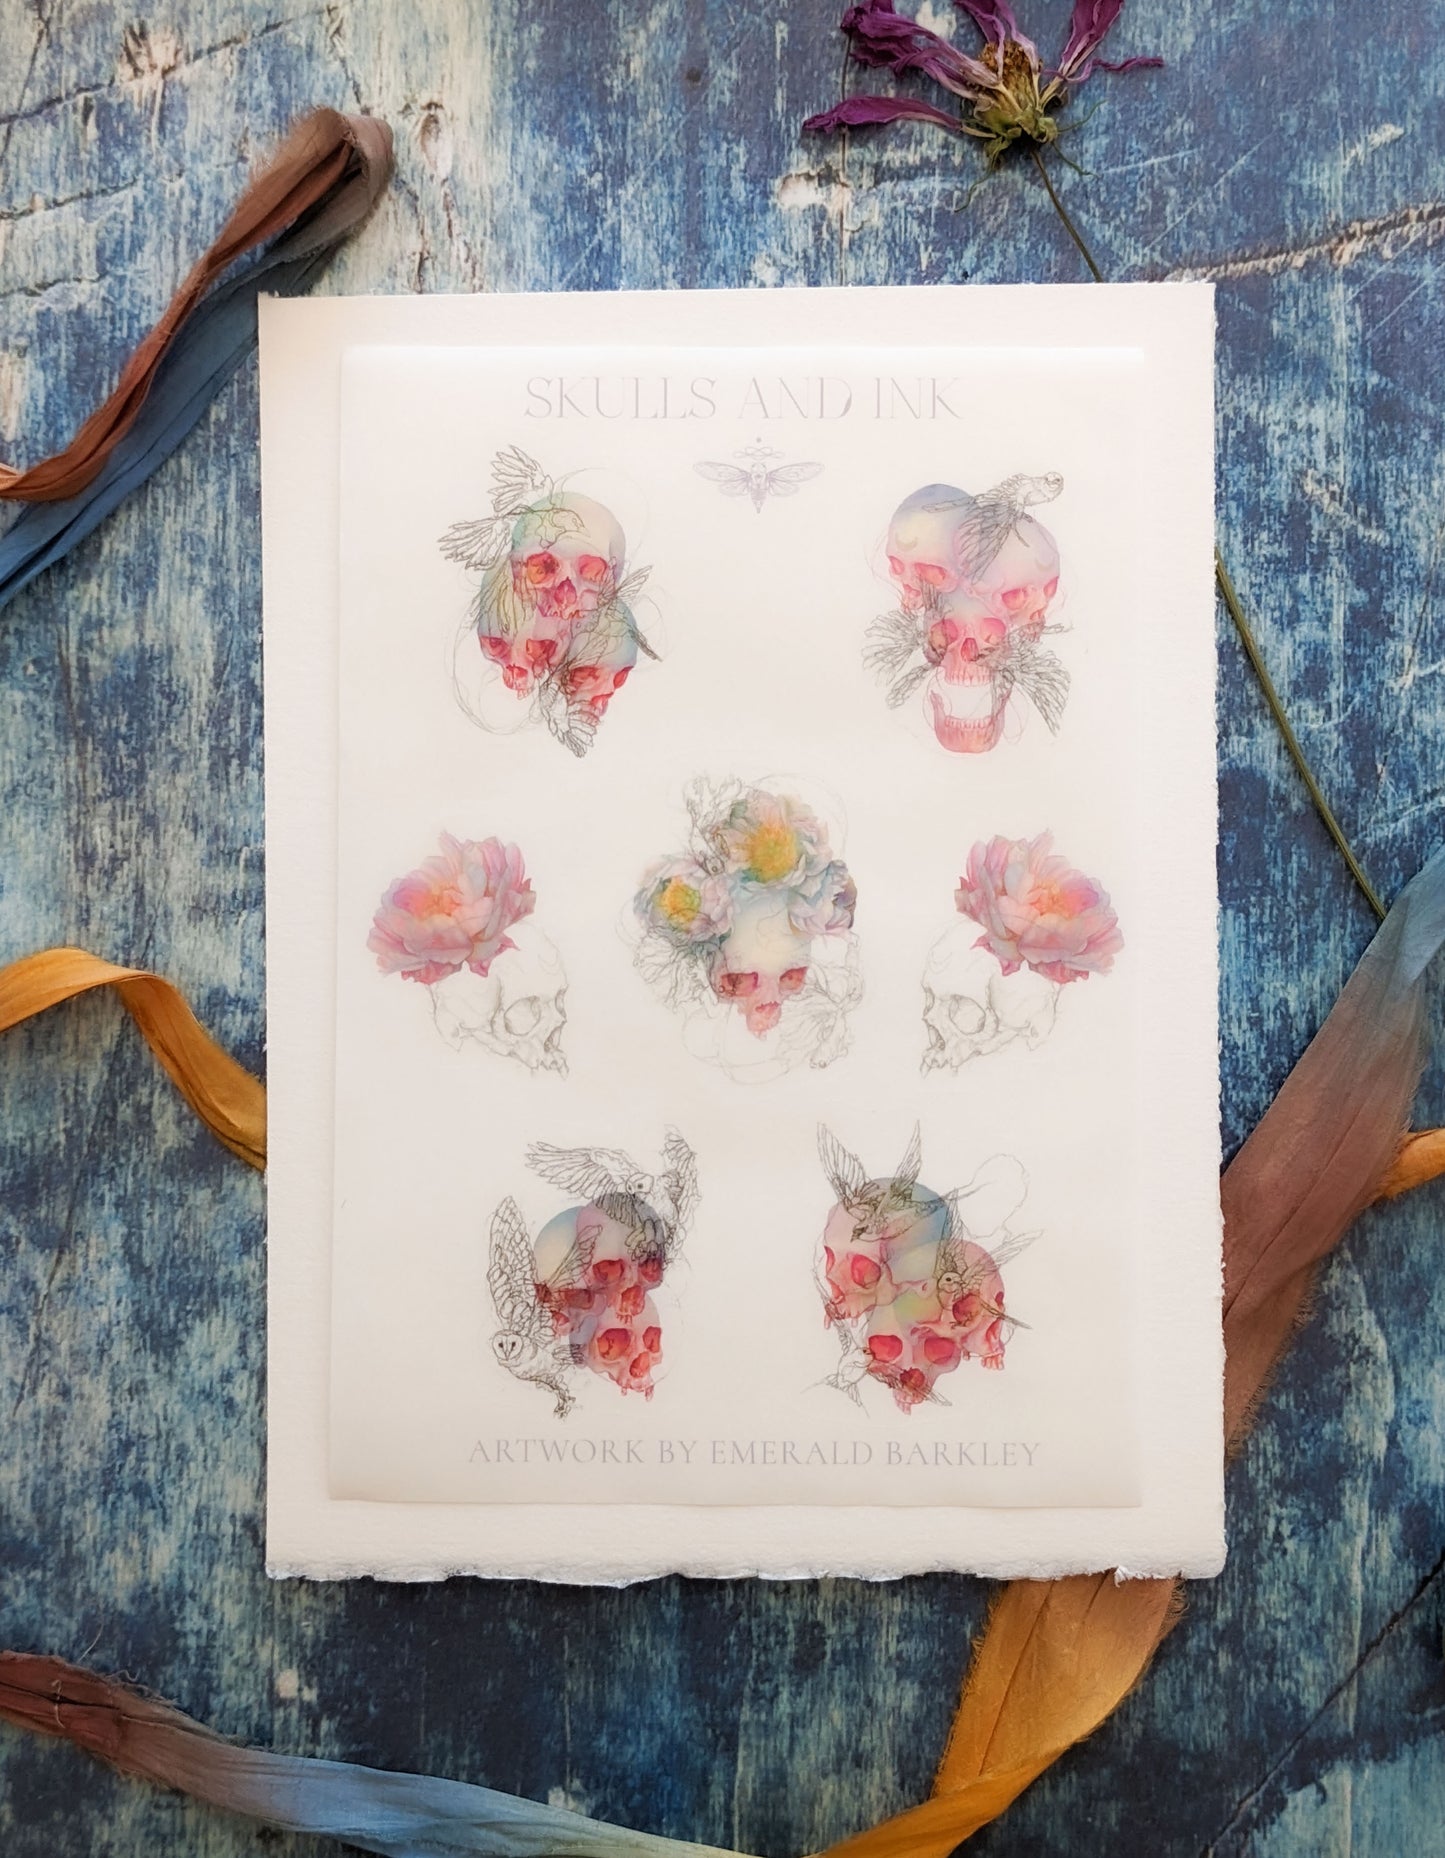 Washi Sticker Set – Skulls and Ink